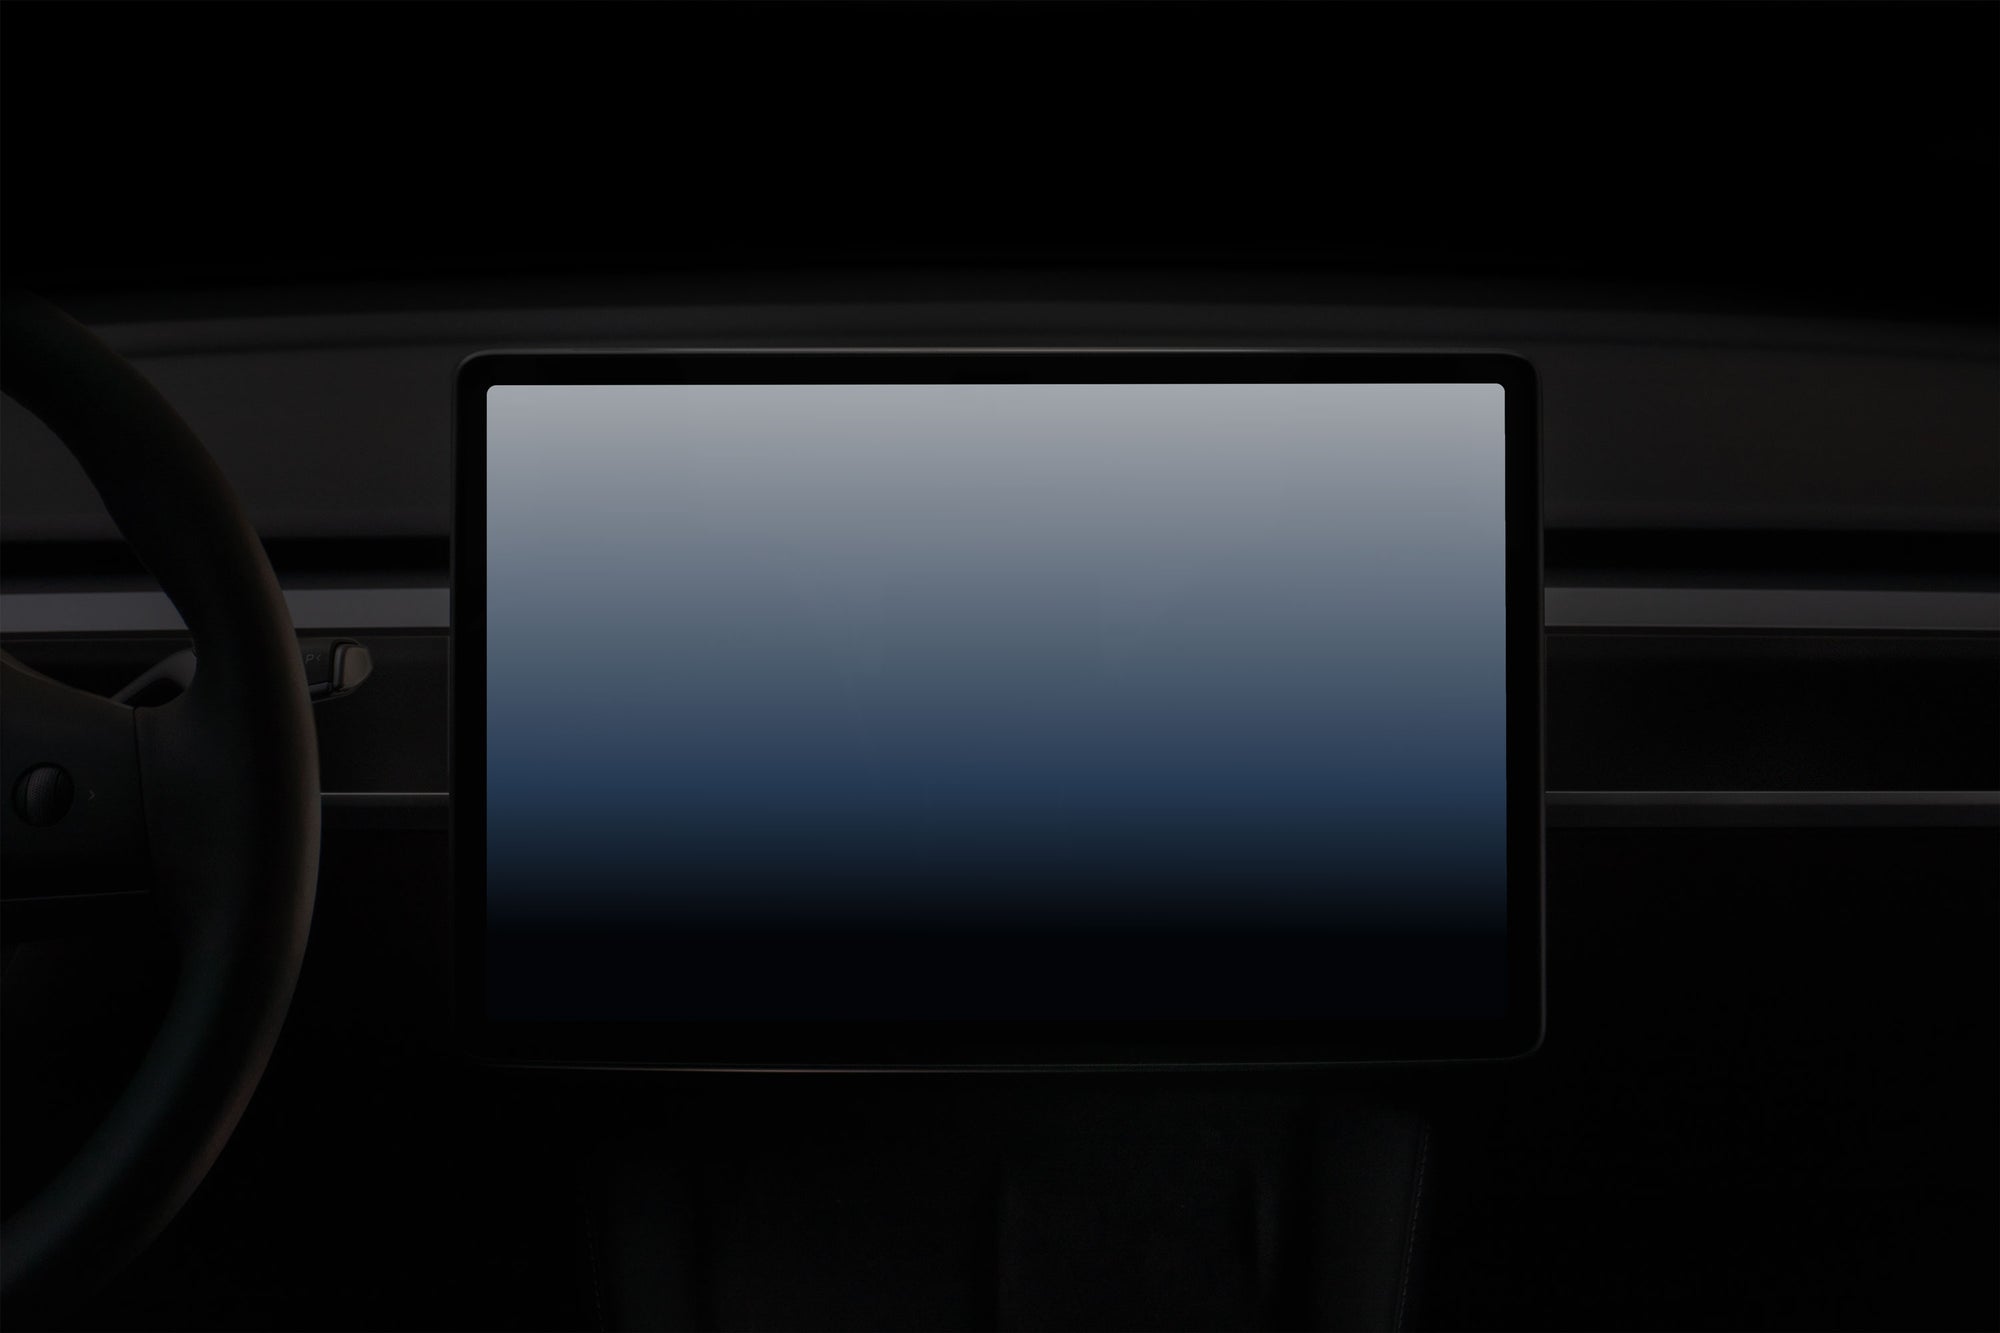 NR07 — Tesla Touchscreen